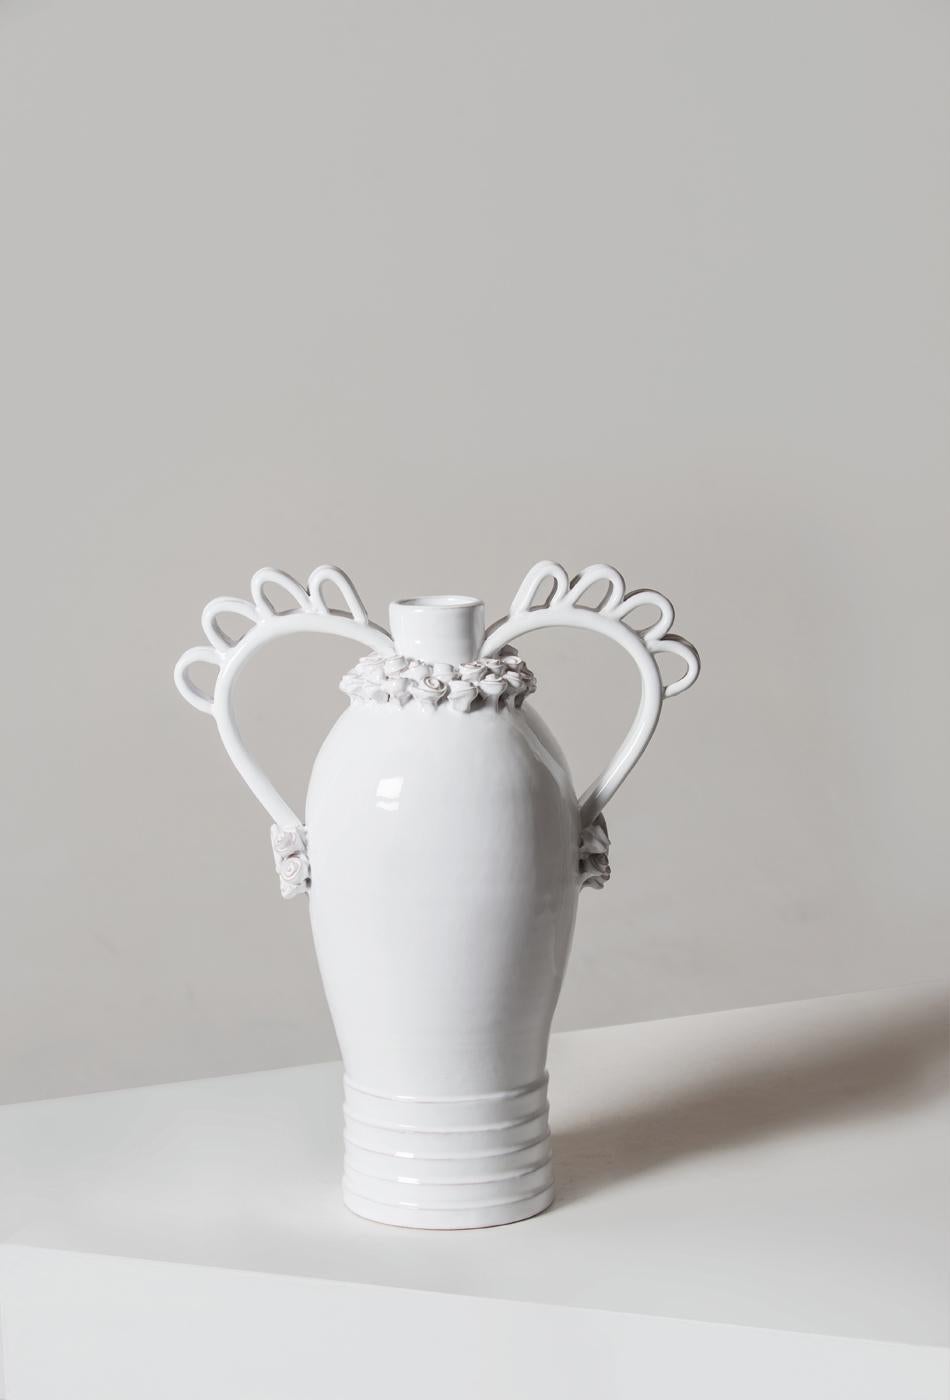 Glazed Marria, a Reinterpretation of the Sardinian Nuptial Vase by Valentina Cameranesi For Sale